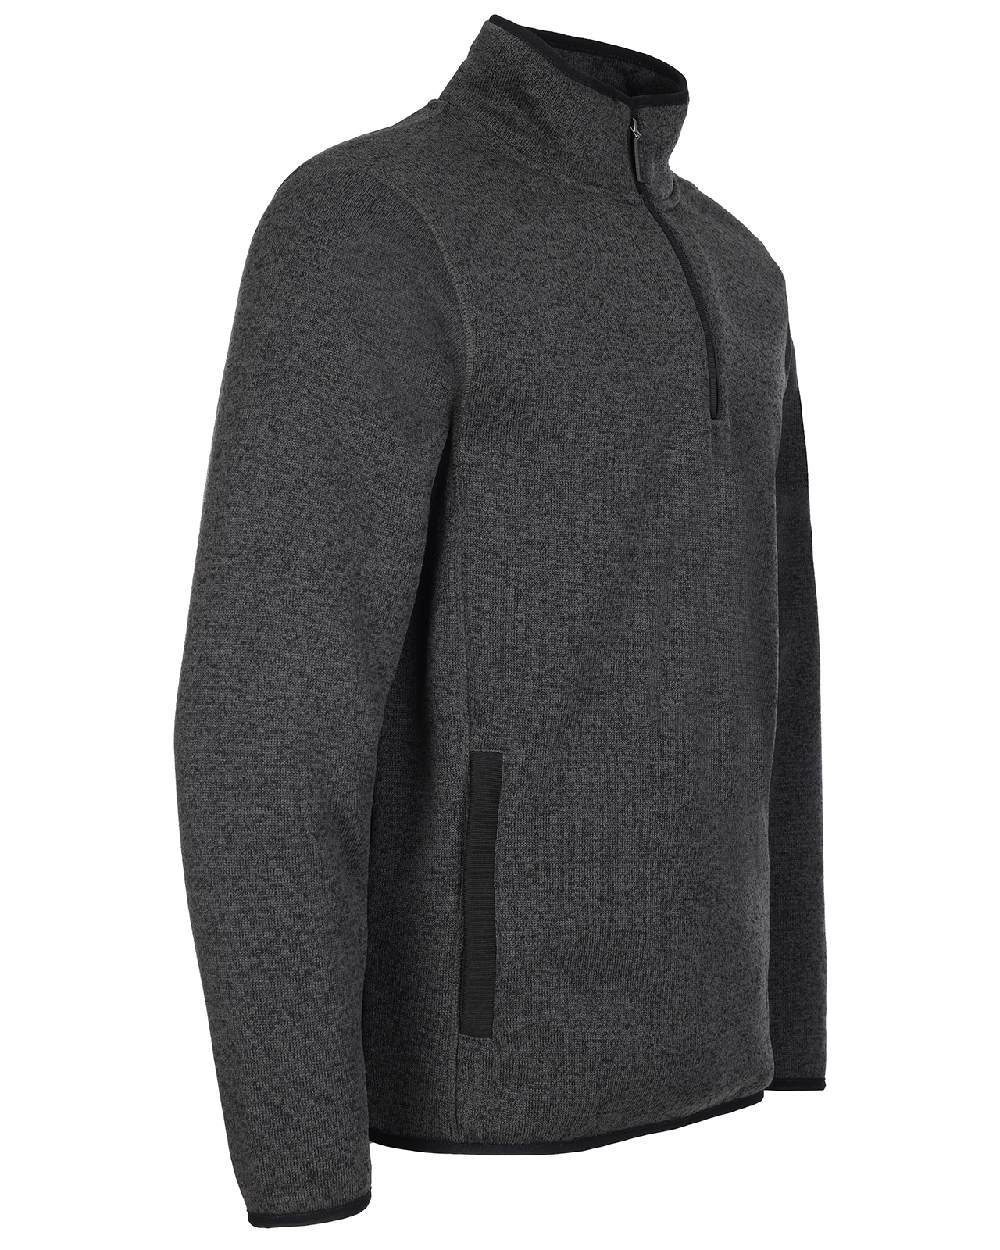 Grey coloured Fort Easton Half Zip Fleece Pullover on white background 